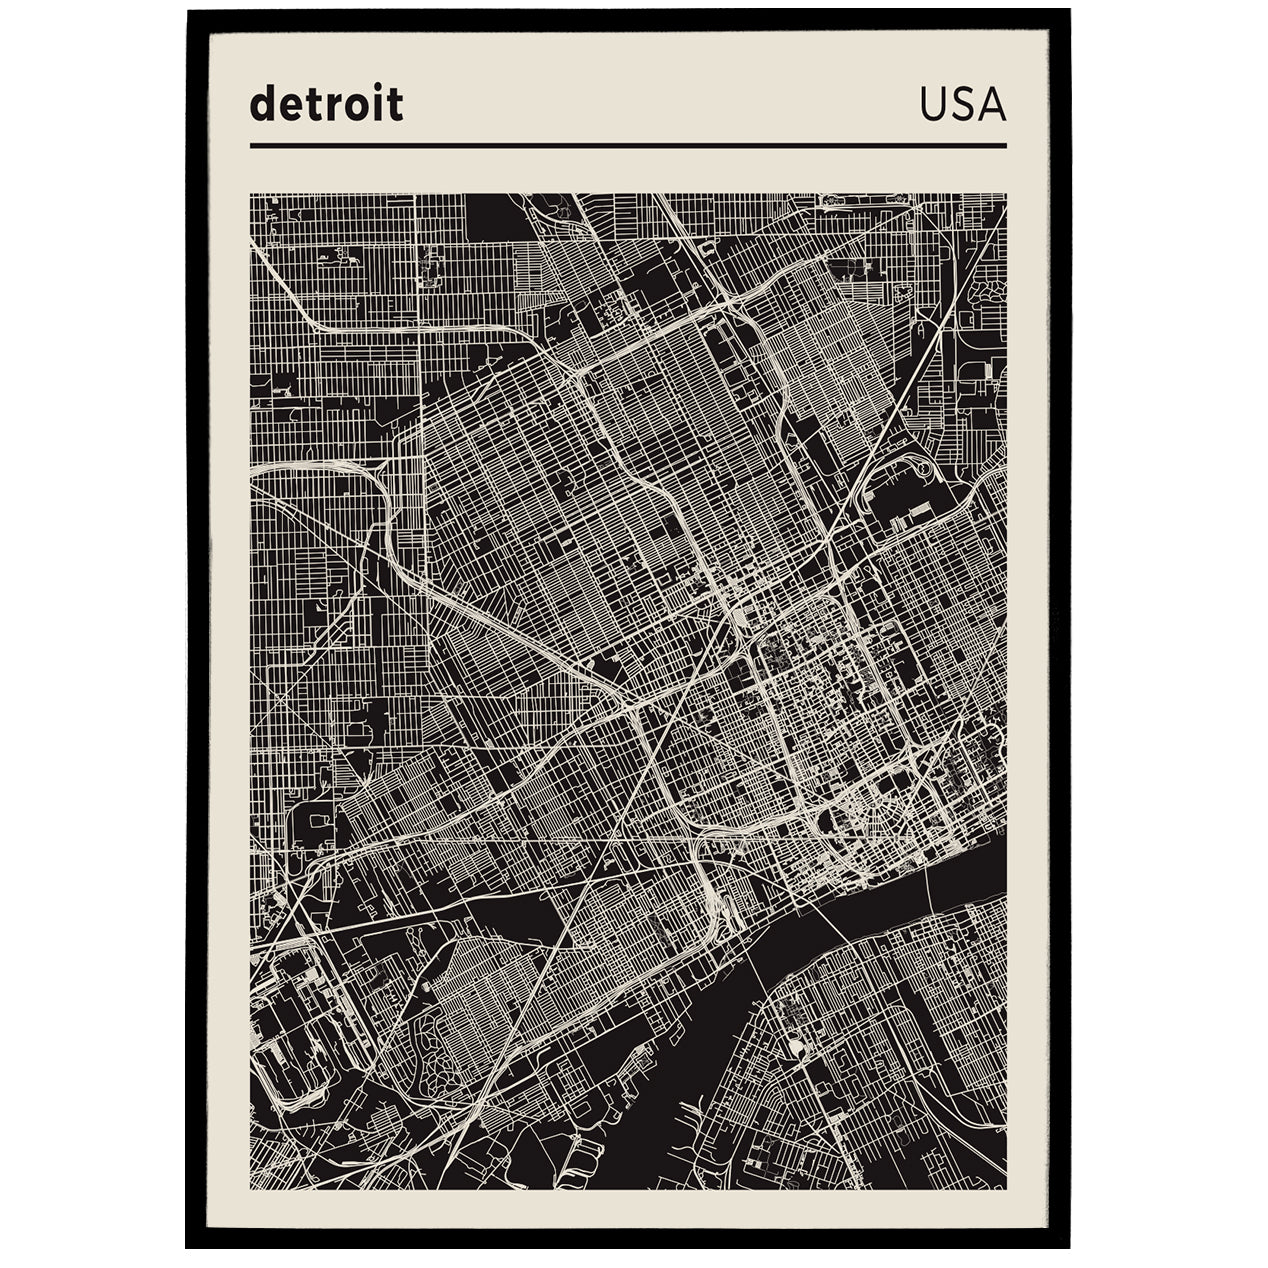 Detroit USA - City Map Poster Print